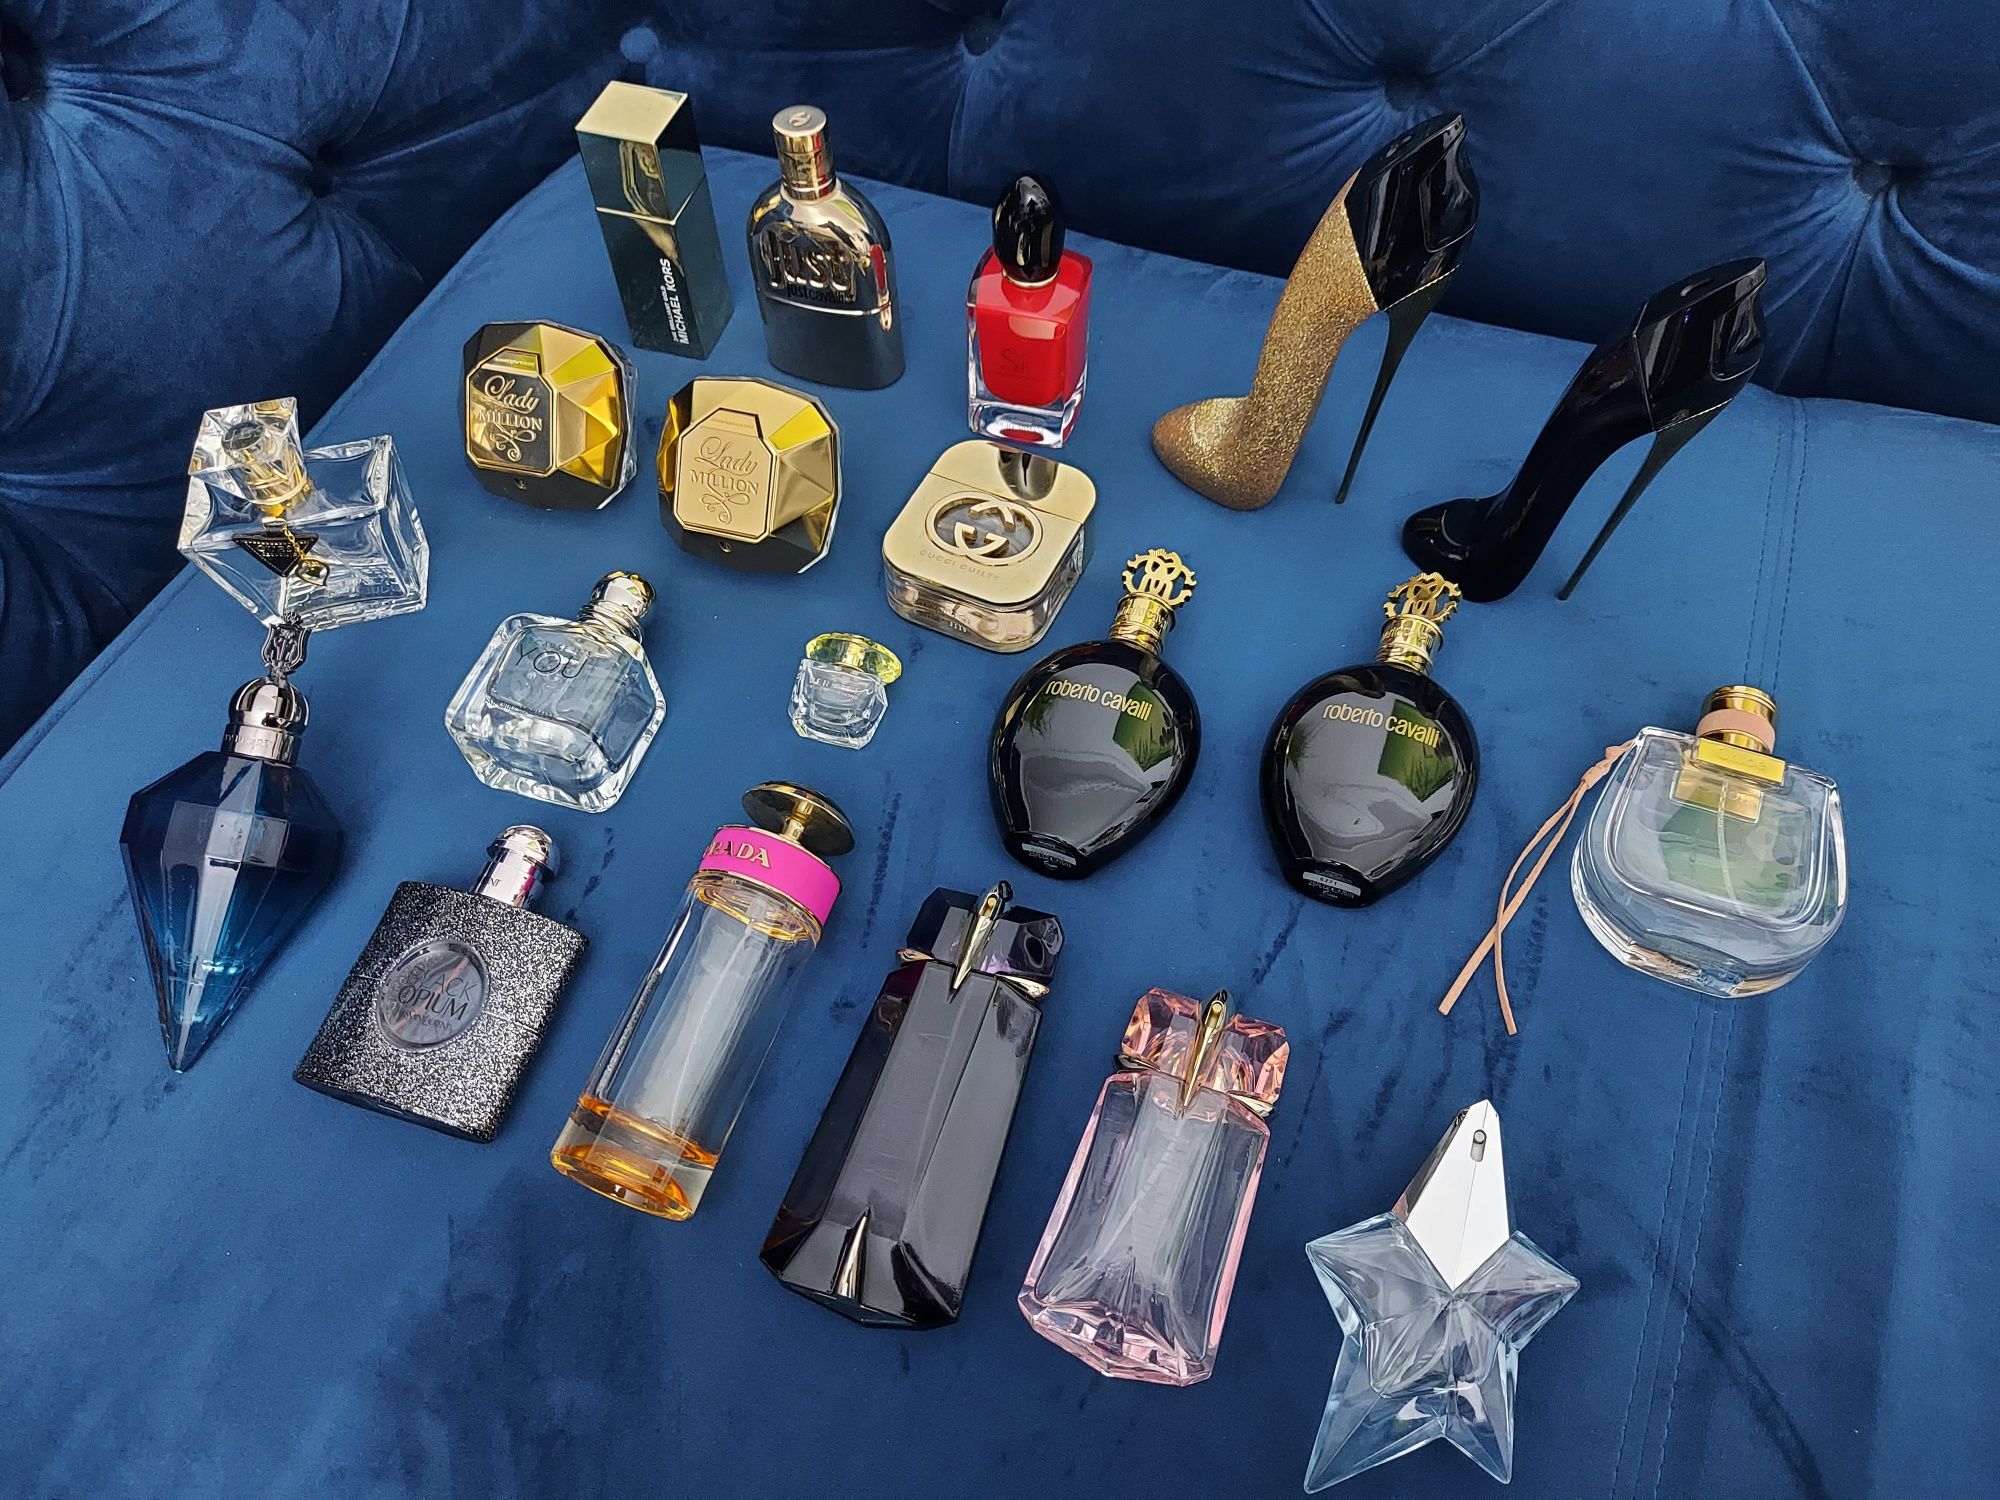 Colectie sticle goale parfum dama